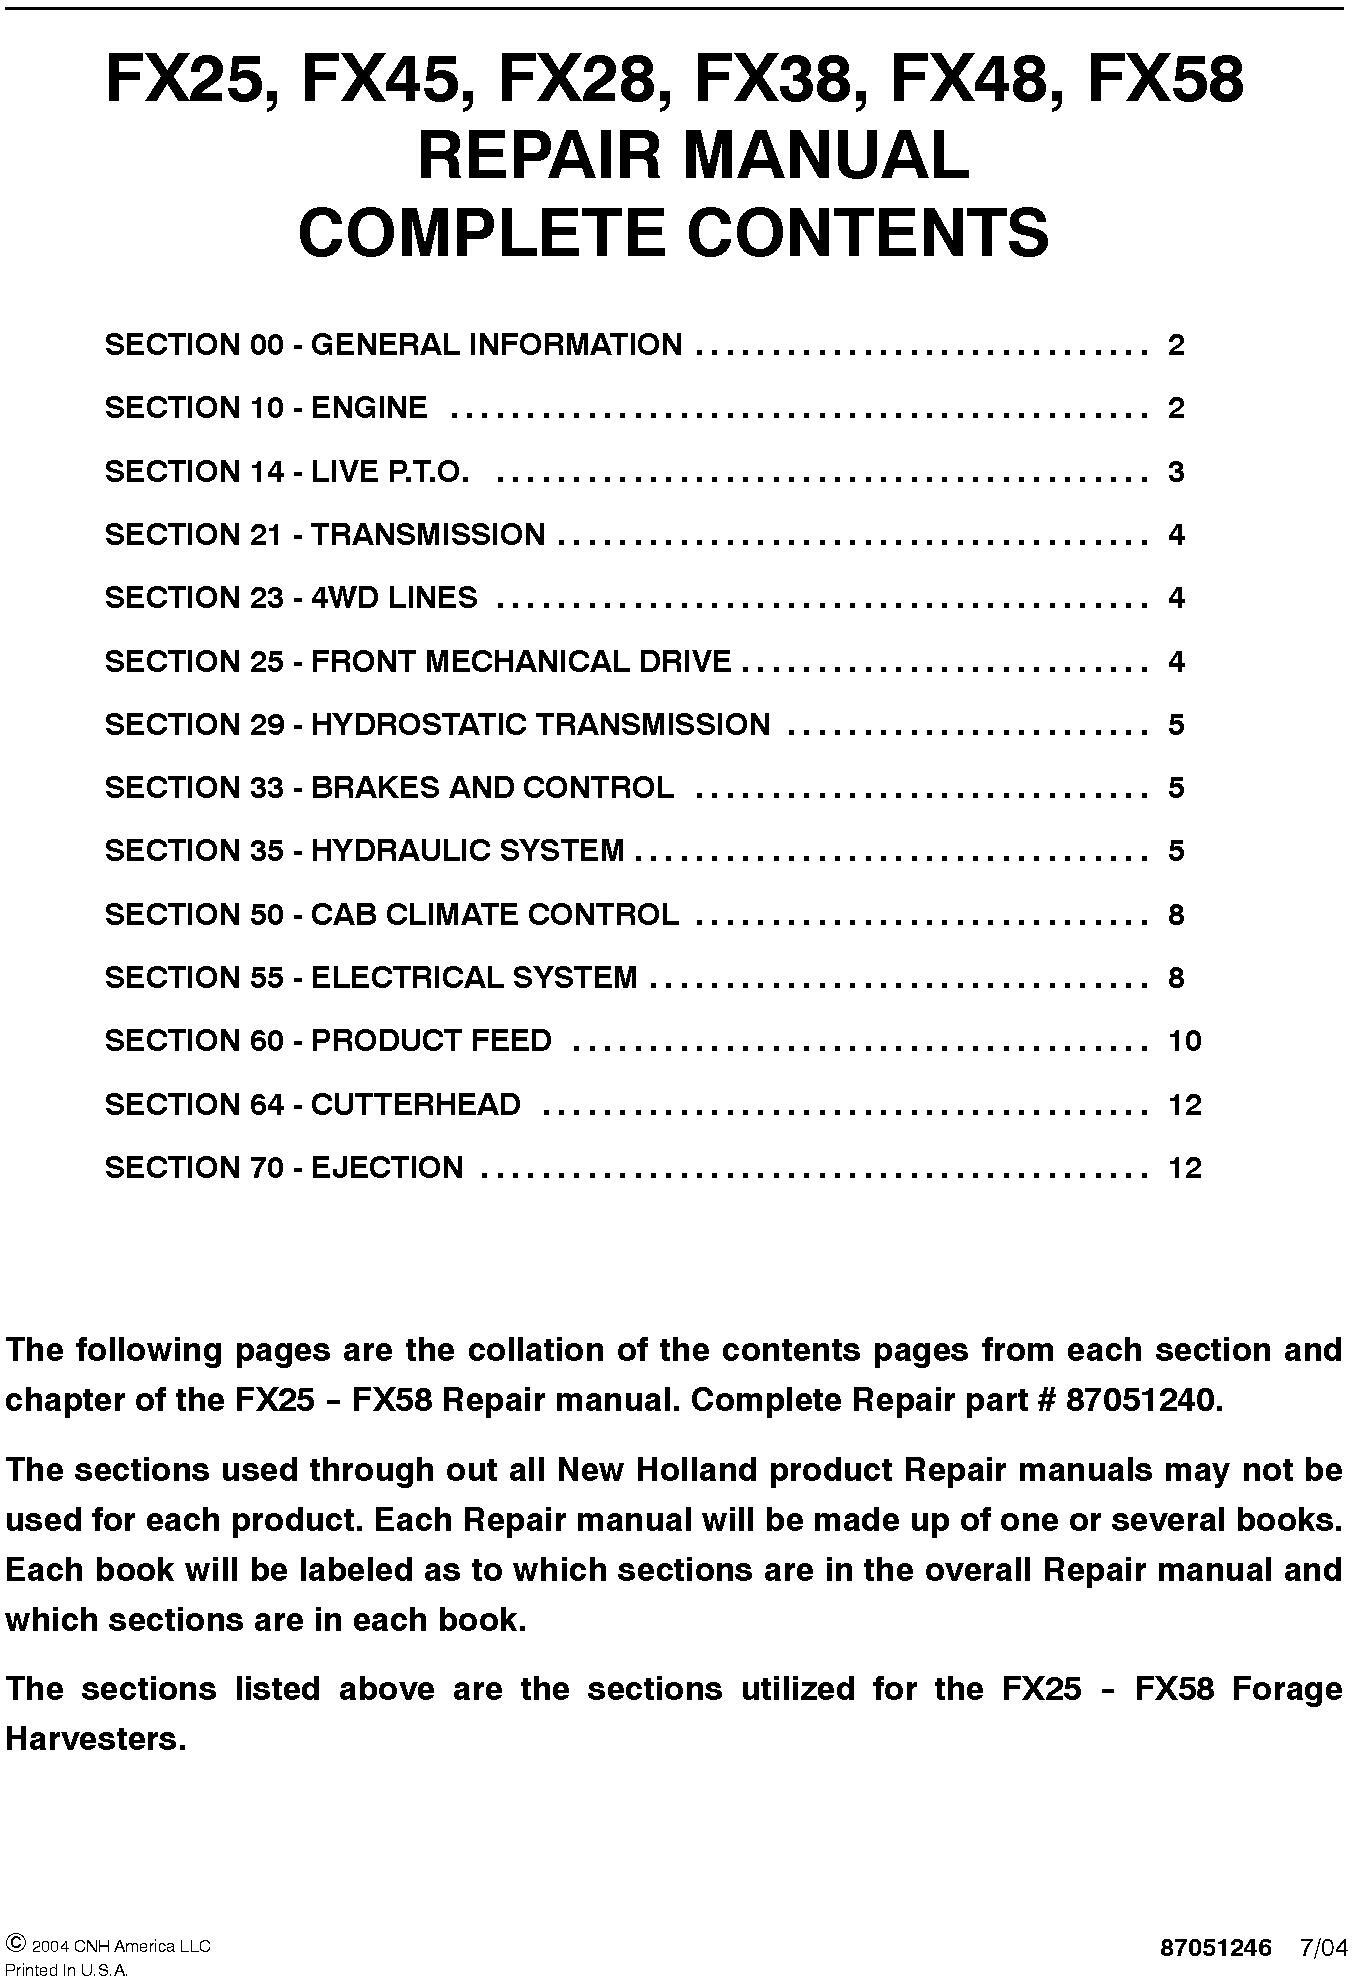 New Holland FX25, FX28, FX38, FX45, FX48, FX58 Forage Harvester Complete Service Manual - 19371